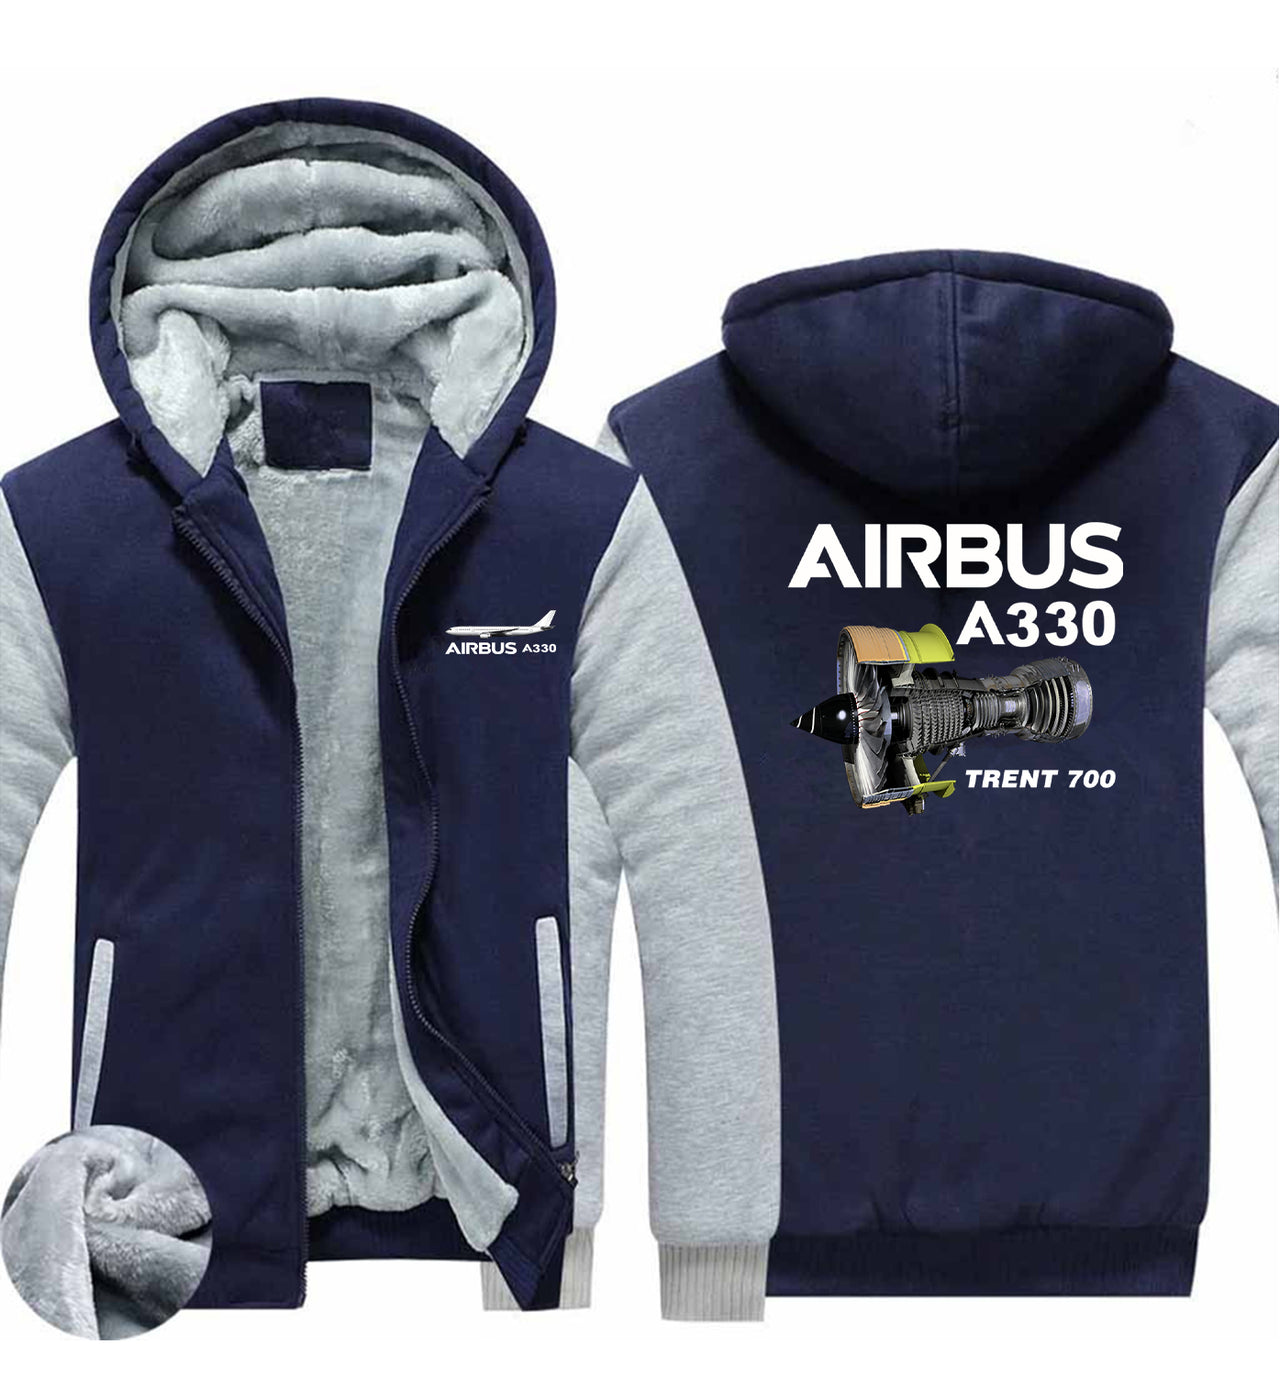 Airbus A330 & Trent 700 Engine Designed Zipped Sweatshirts